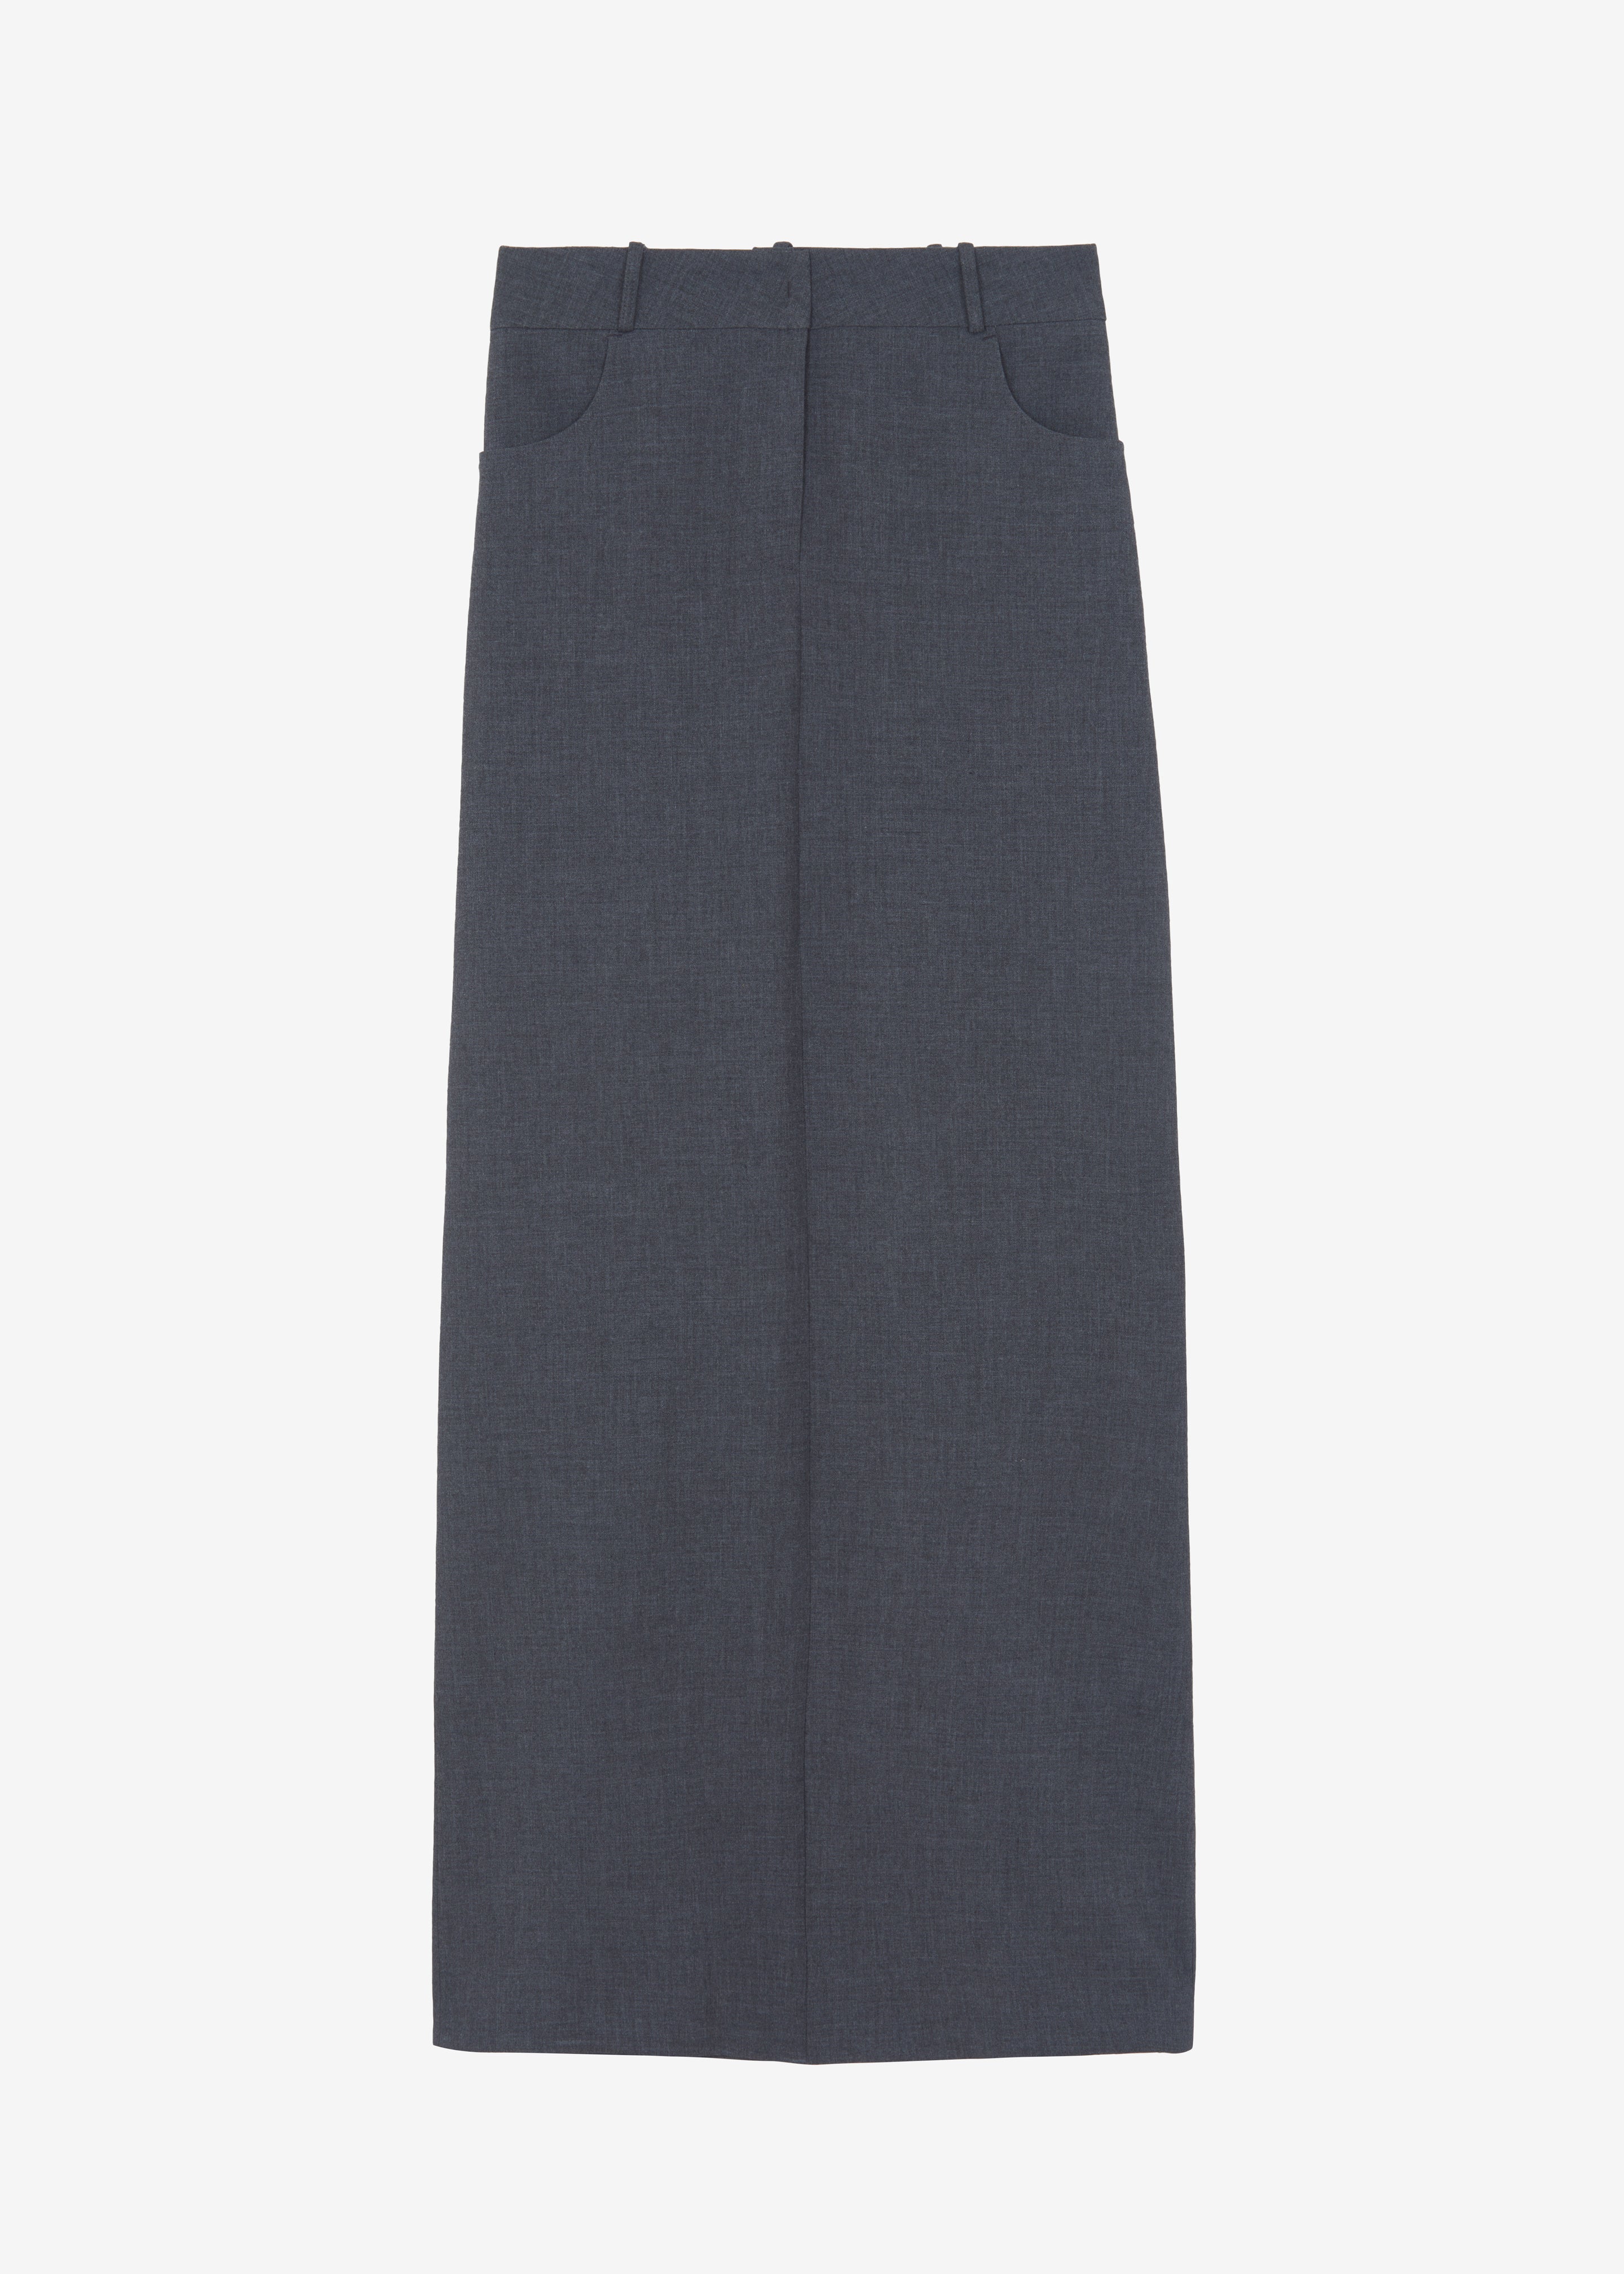 Malvo Long Pencil Skirt - Charcoal - 8